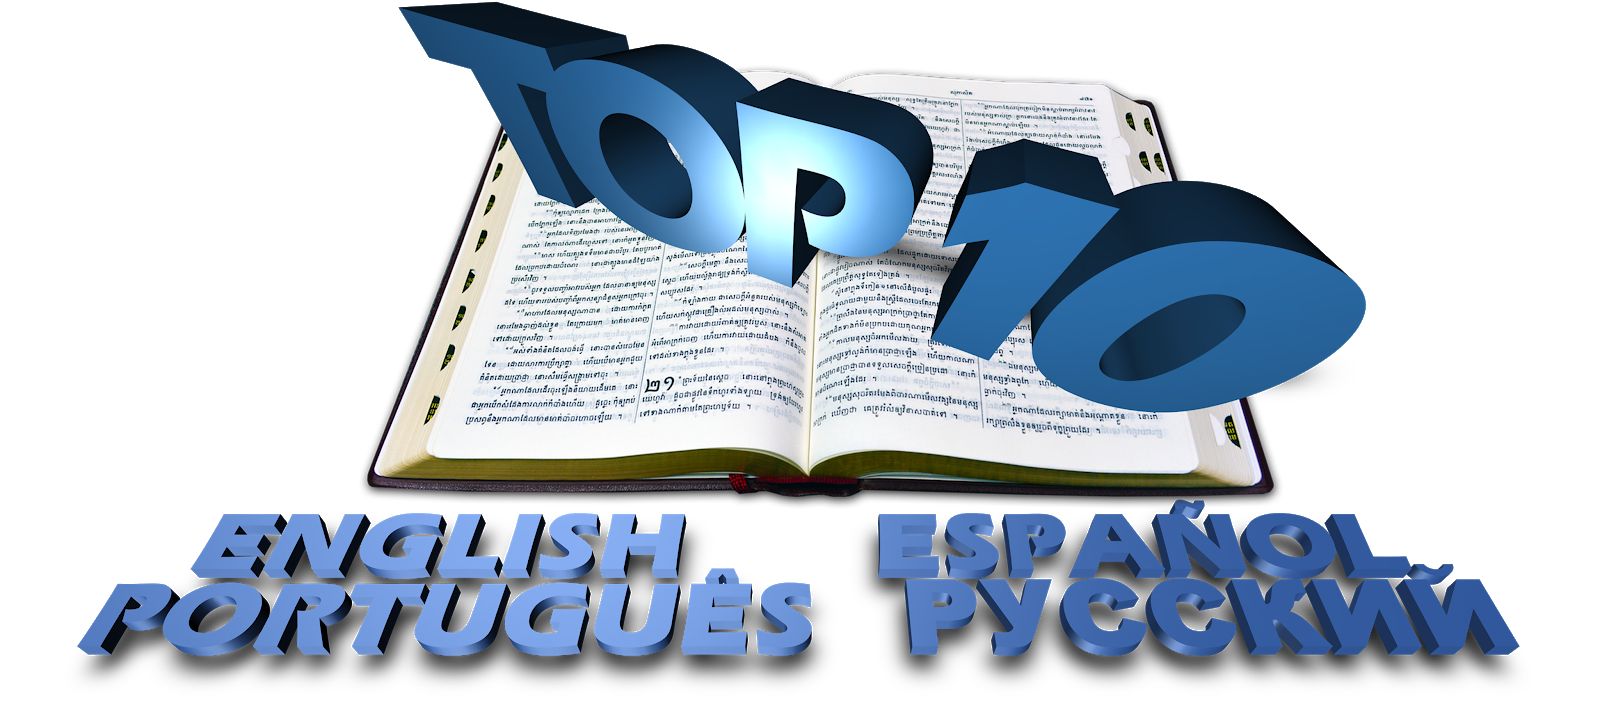 Os Top 10 da Bíblia